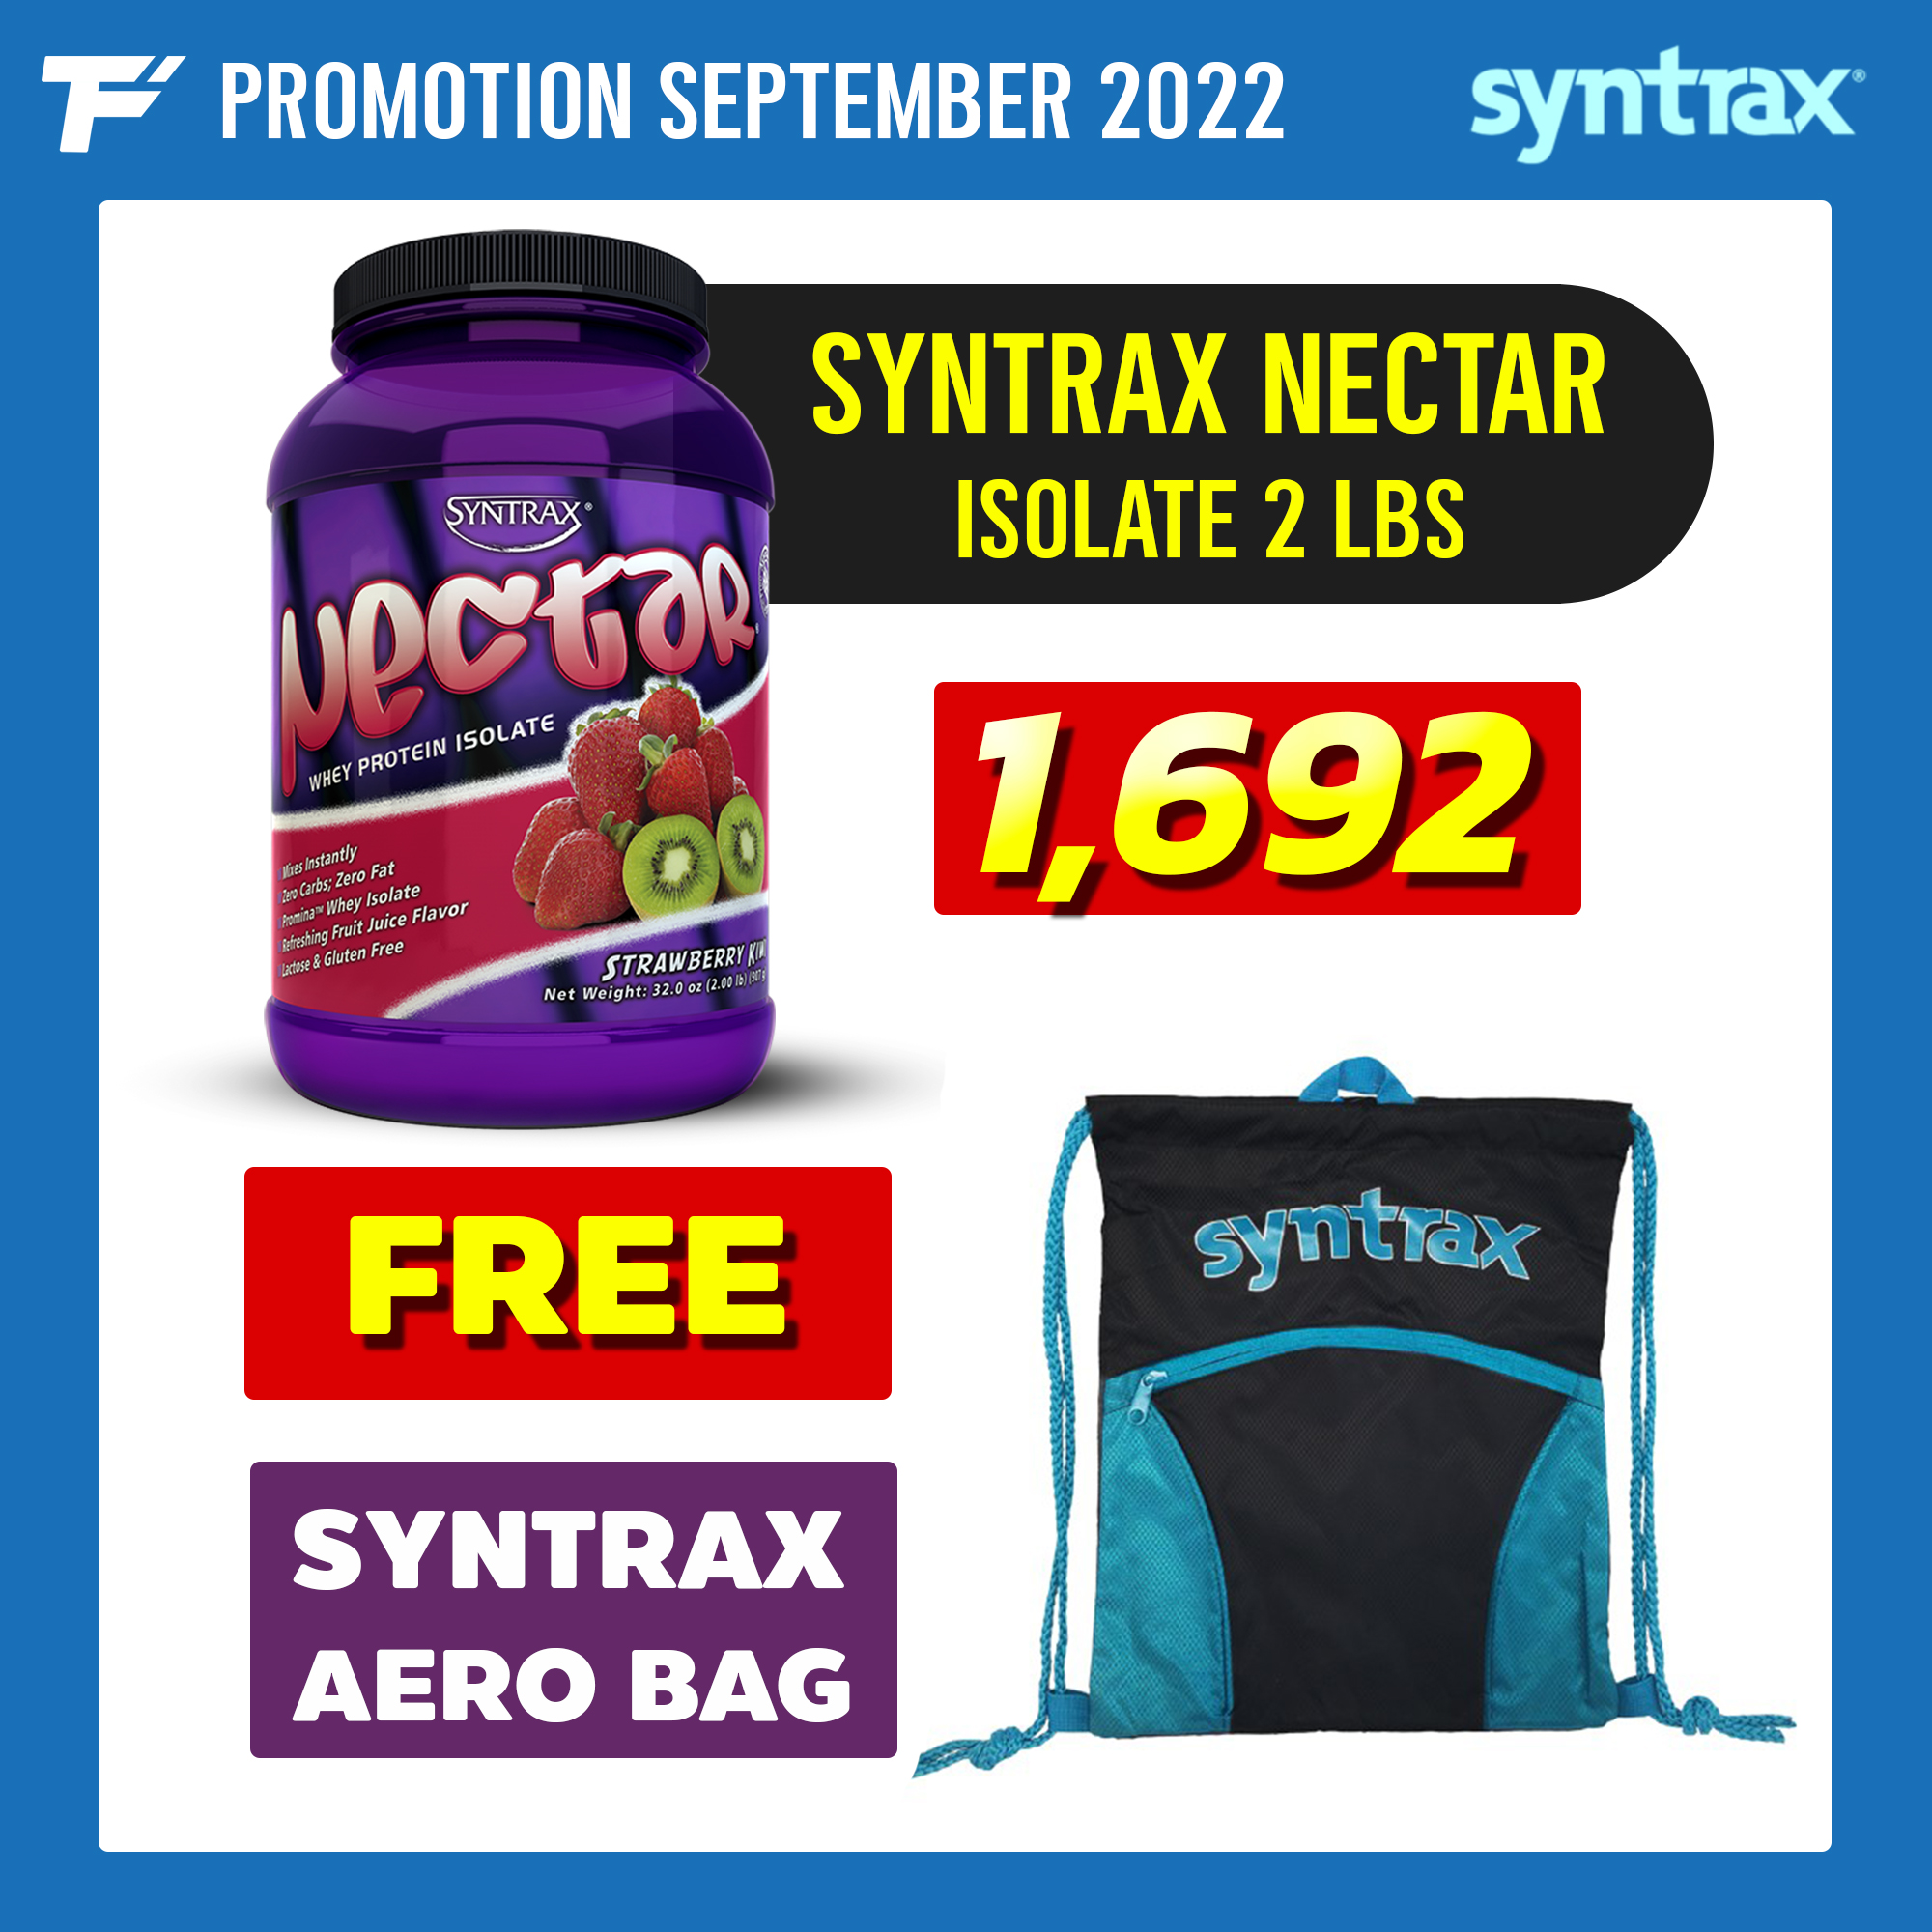 Syntrax Nectar Natural 100% Whey Protein Isolate - 2 LB FREE Syntrax Aero Bag